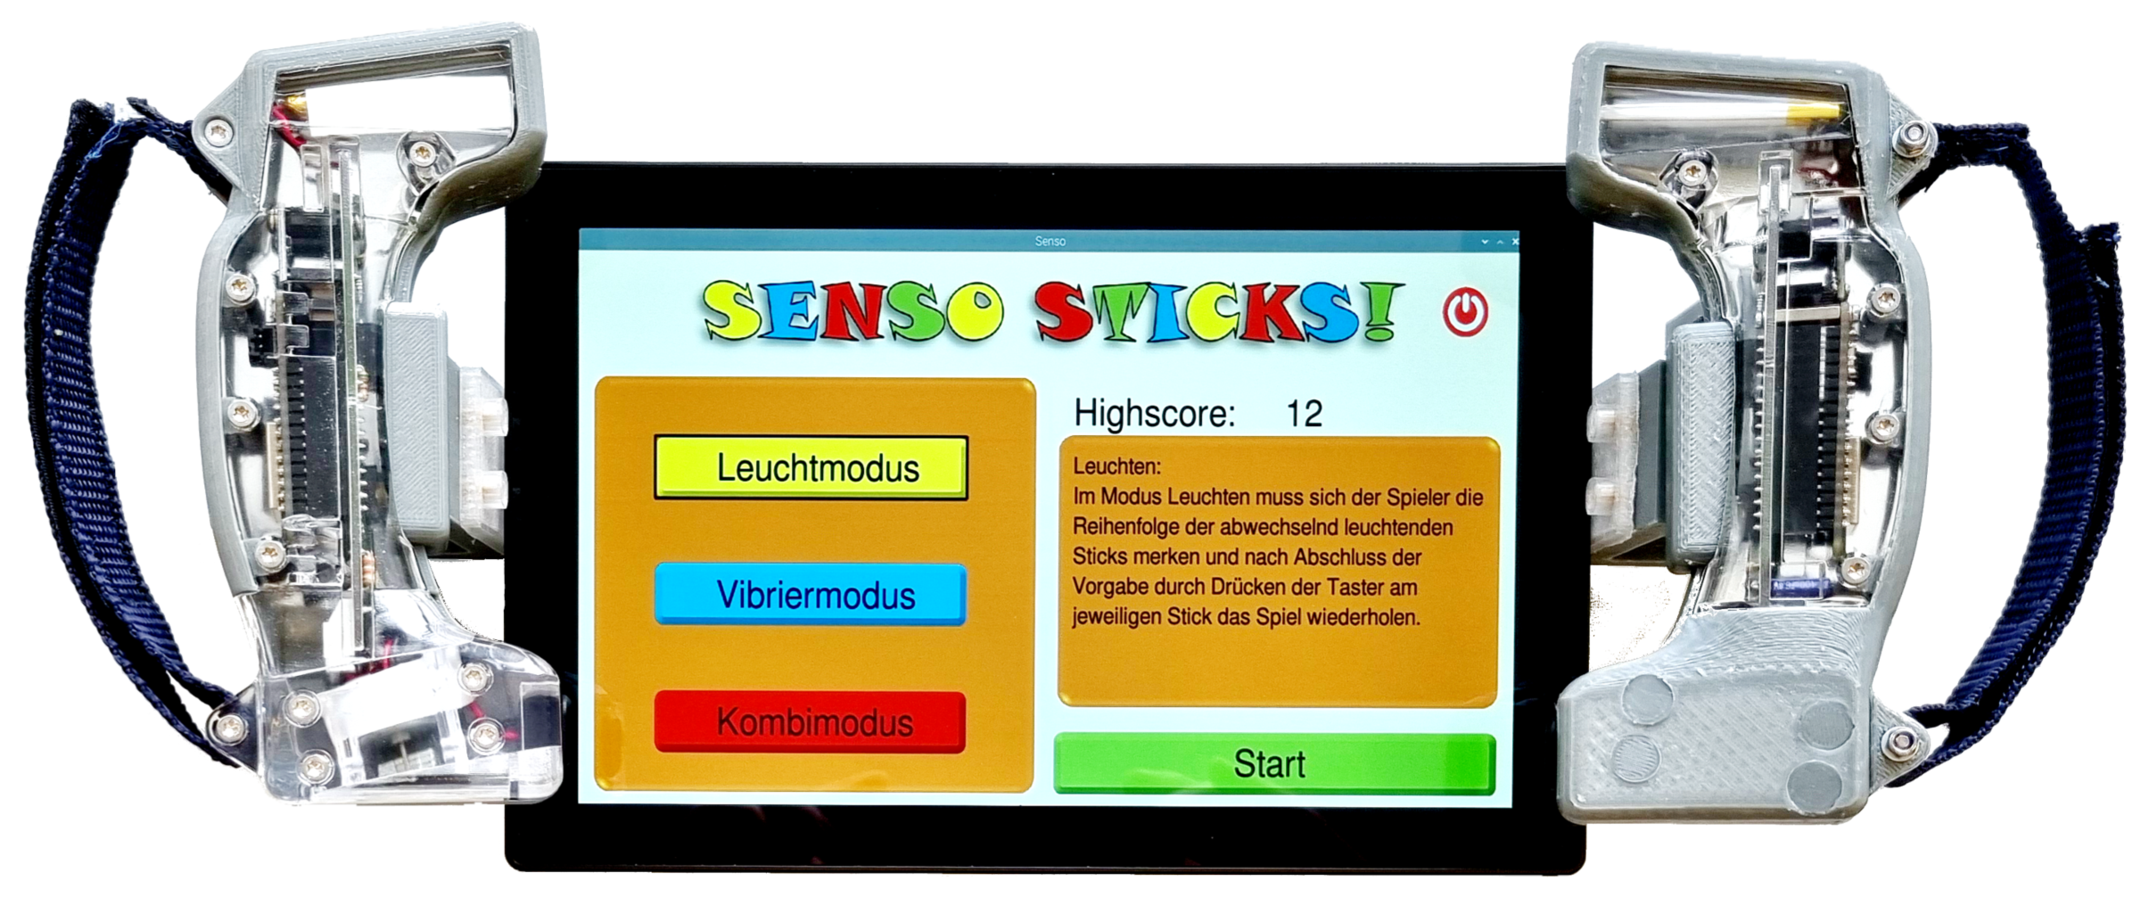 Senso Sticks